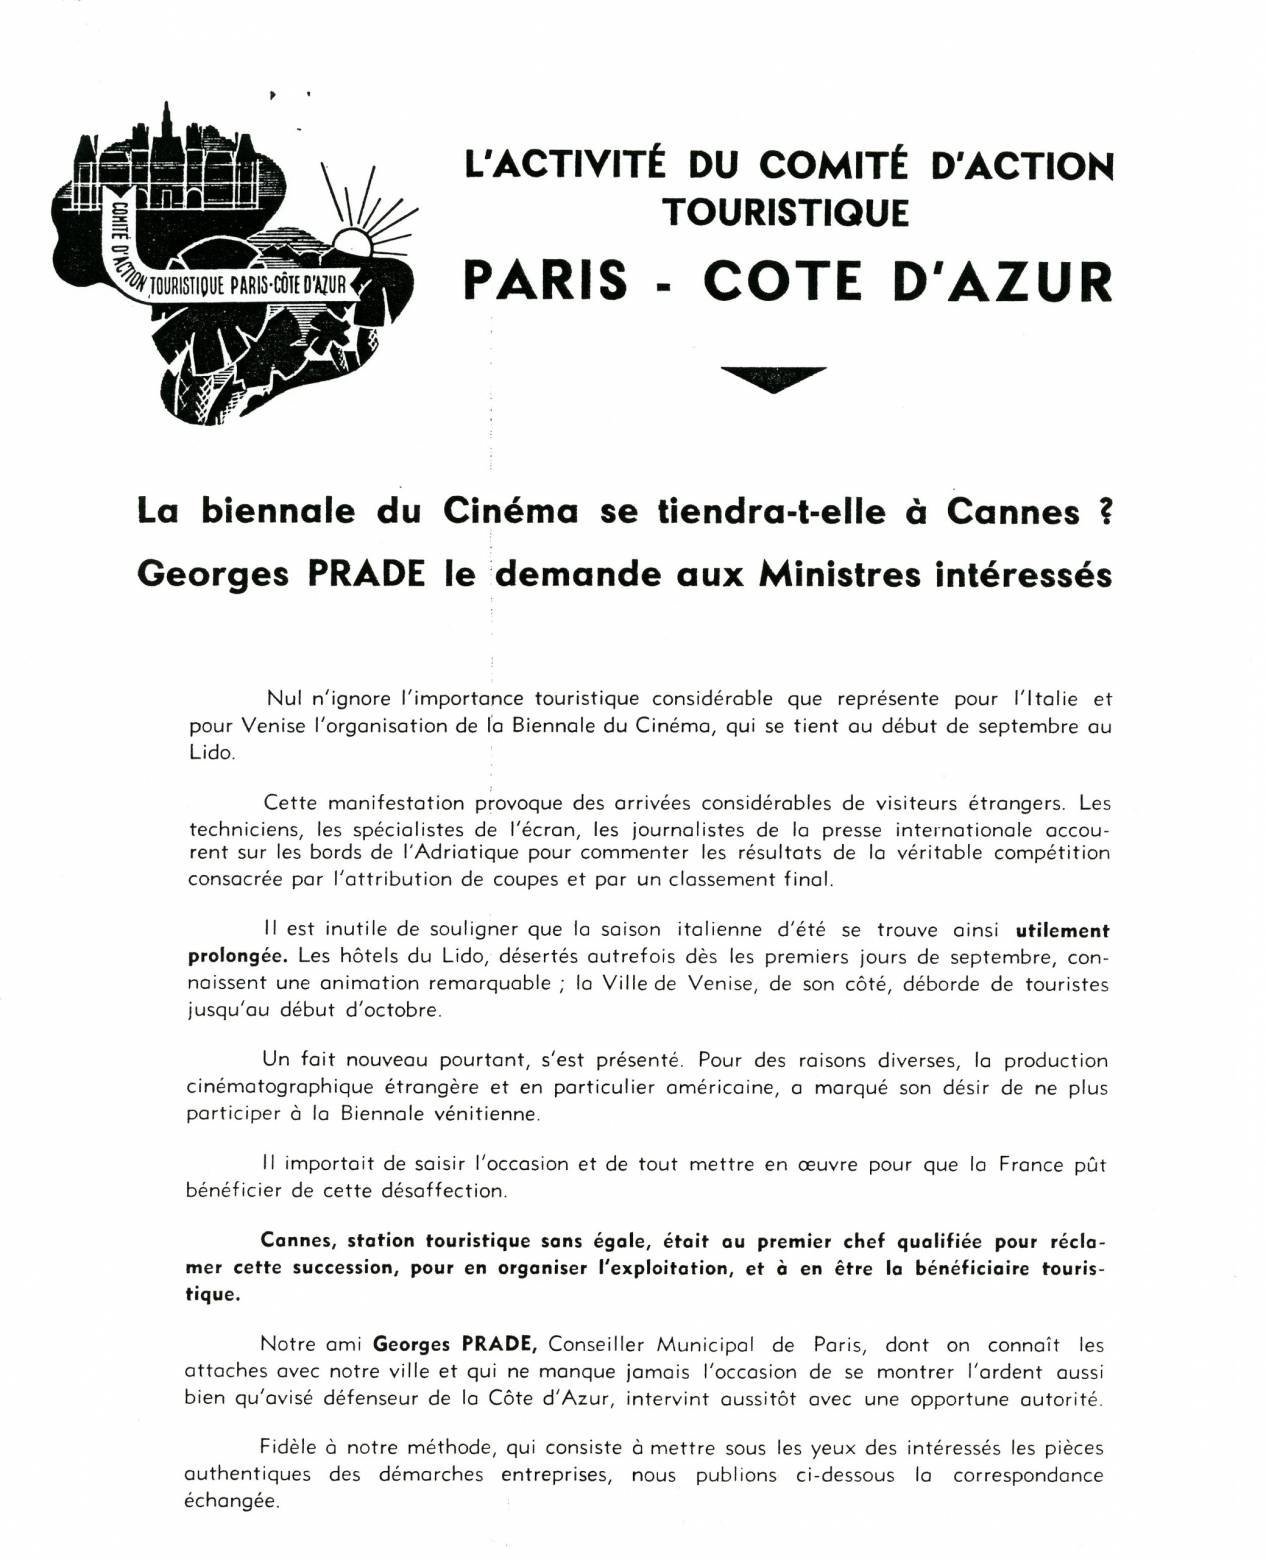 Correspondence of Georges Prade